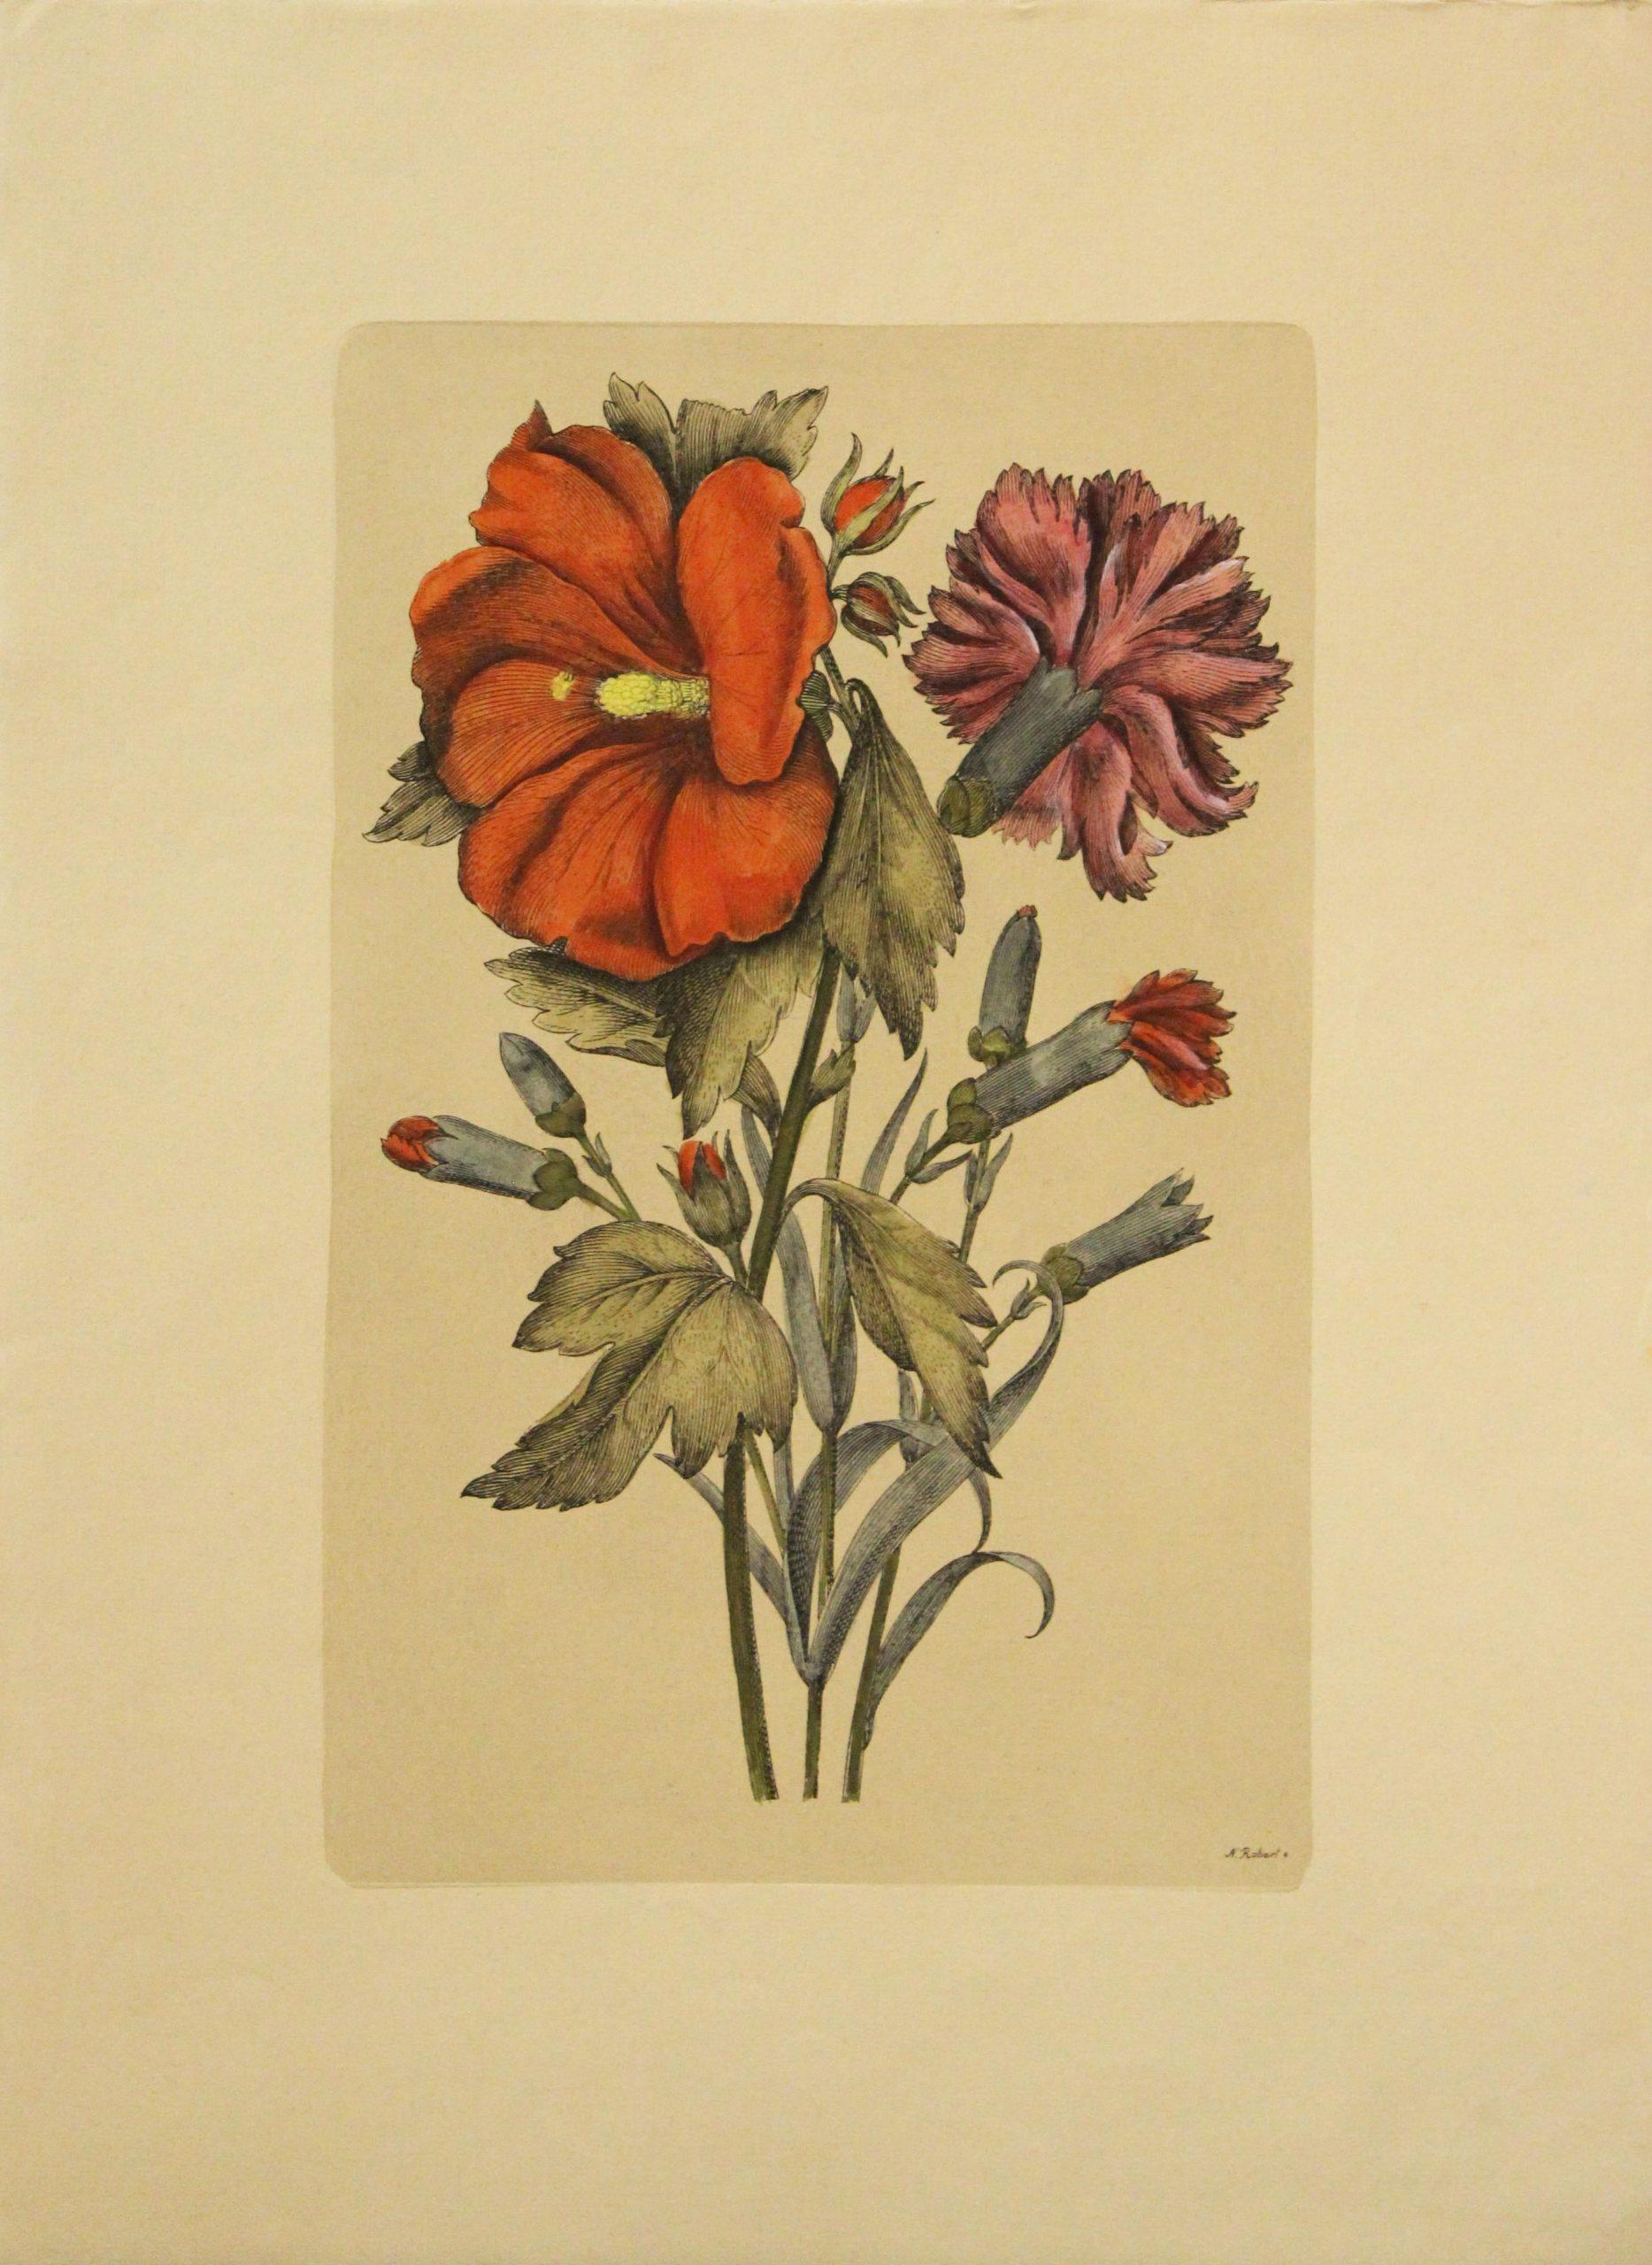 Nicholas Robert Still-Life Print - (Title Unknown)-Botanical Print. Printed in Italy.